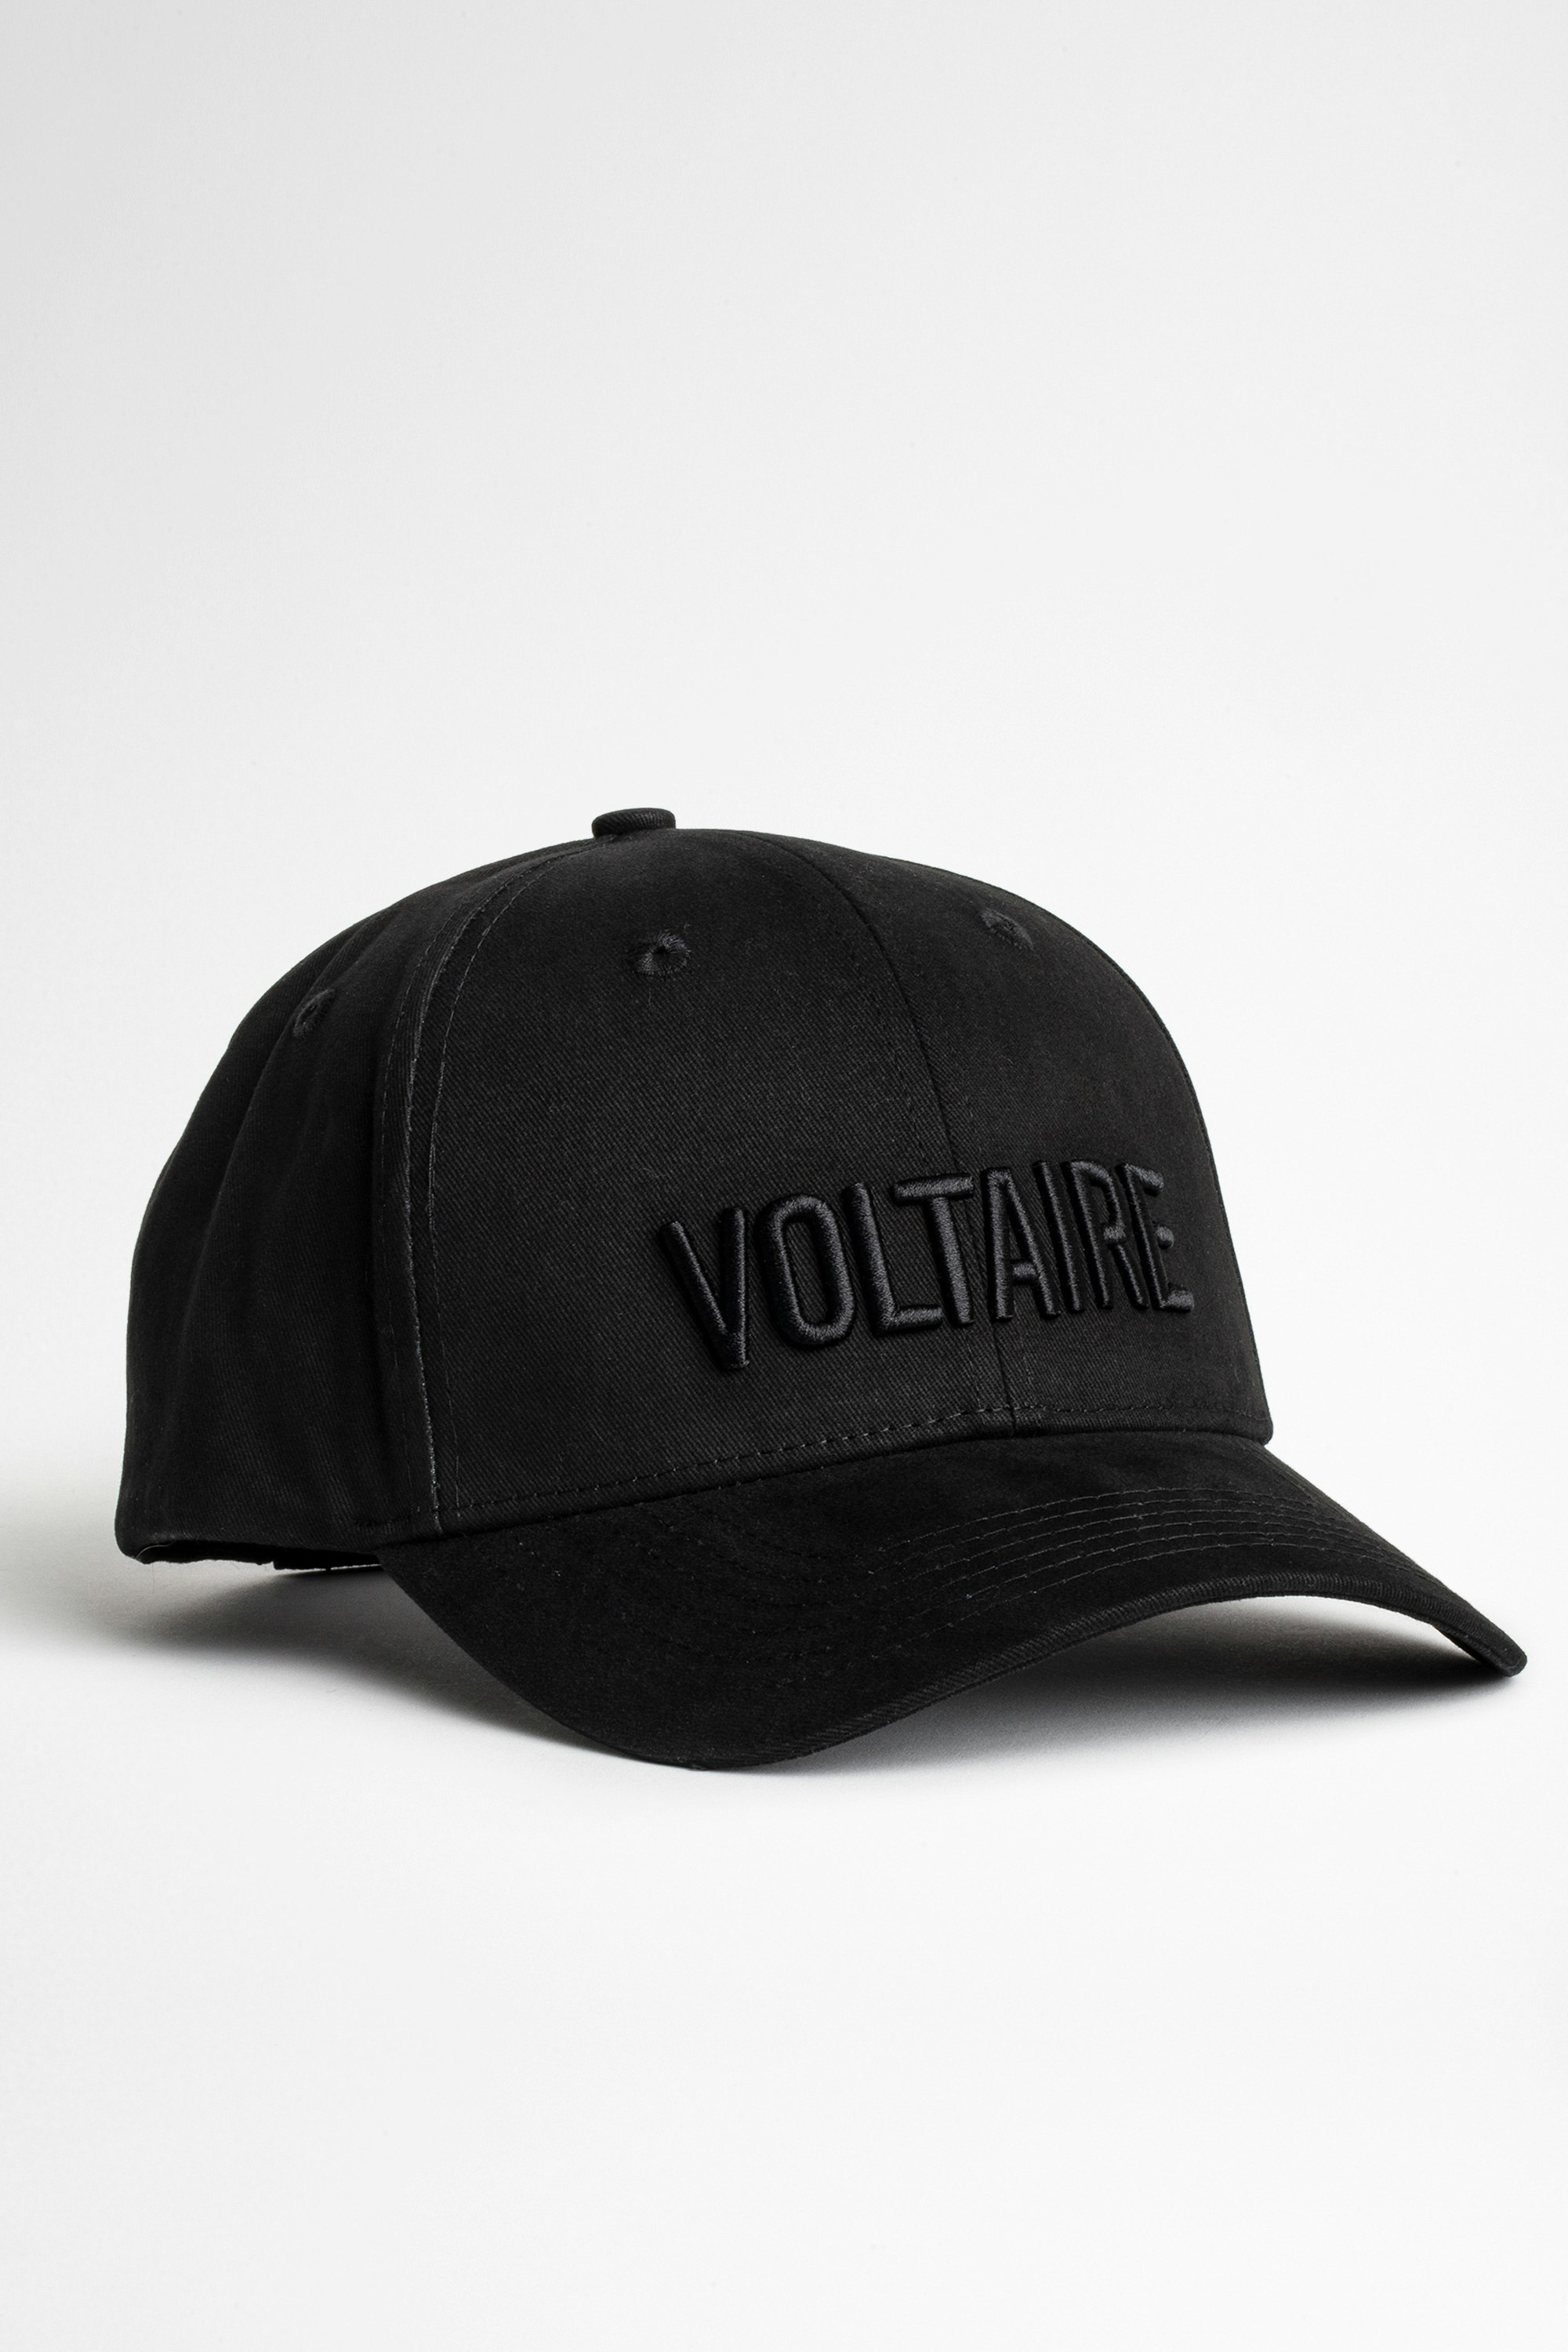 Klelia Voltaire キャップ Men’s black cap